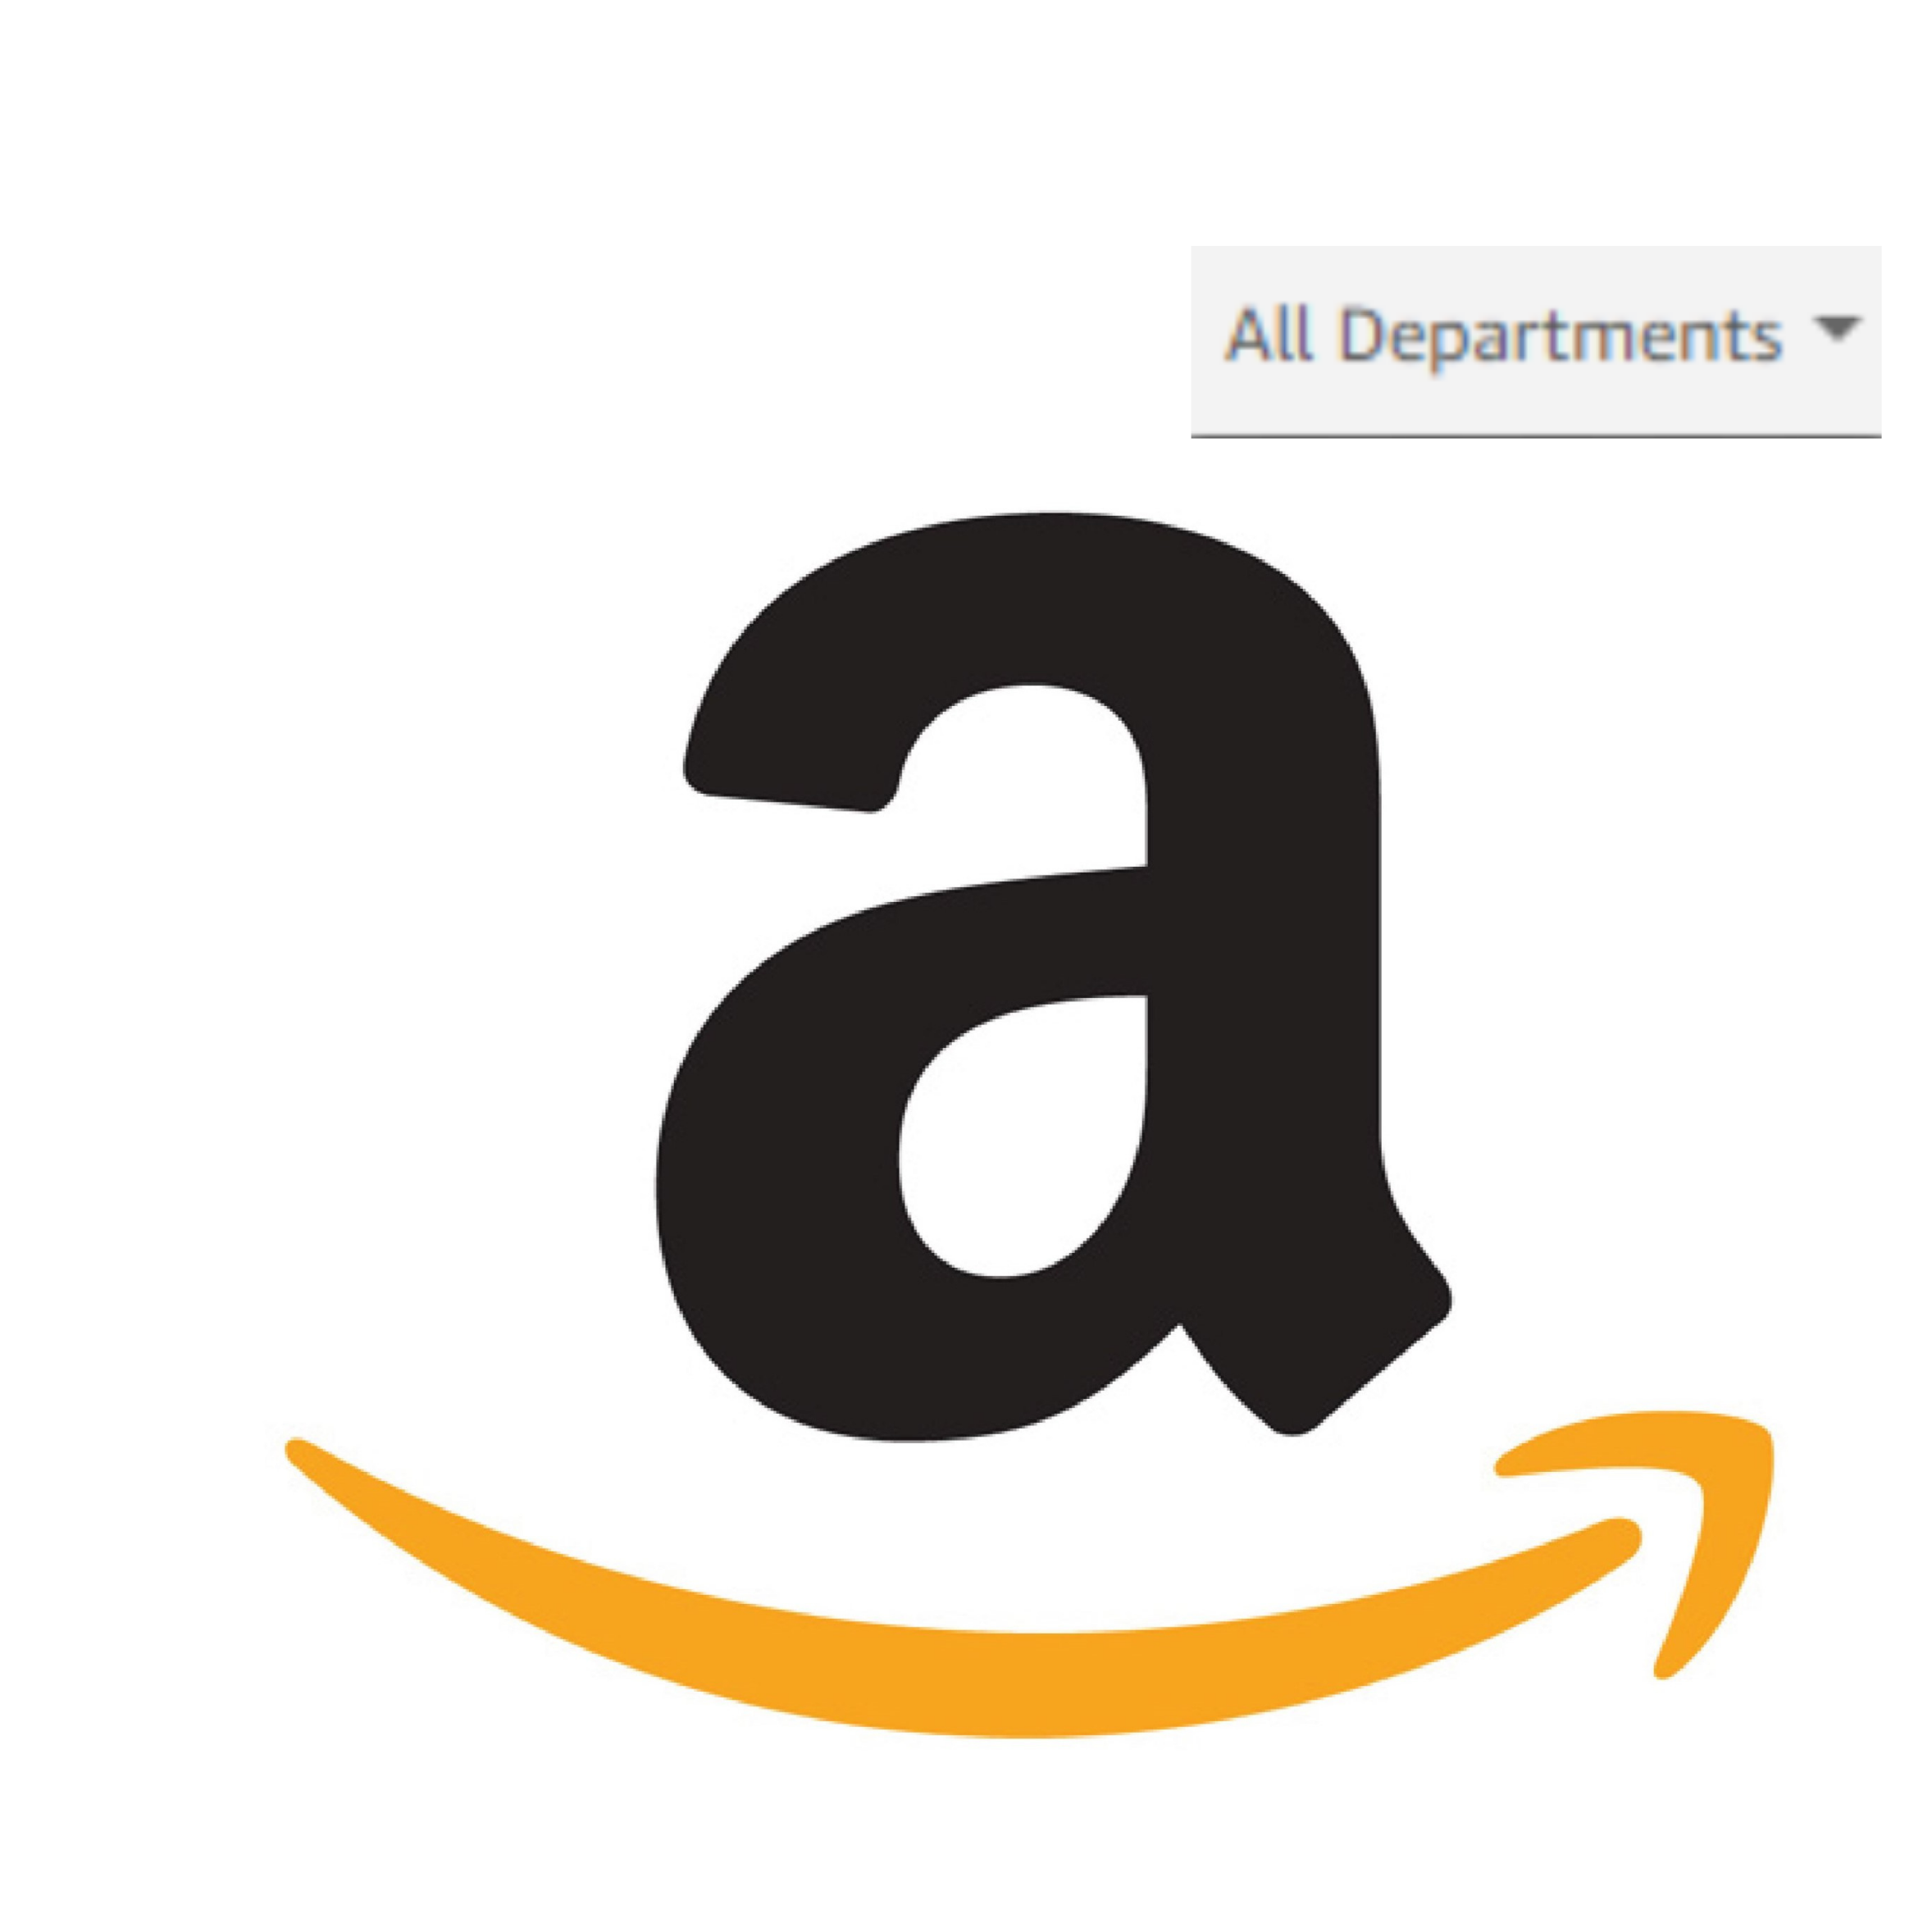 Amazon Product Details Scraper